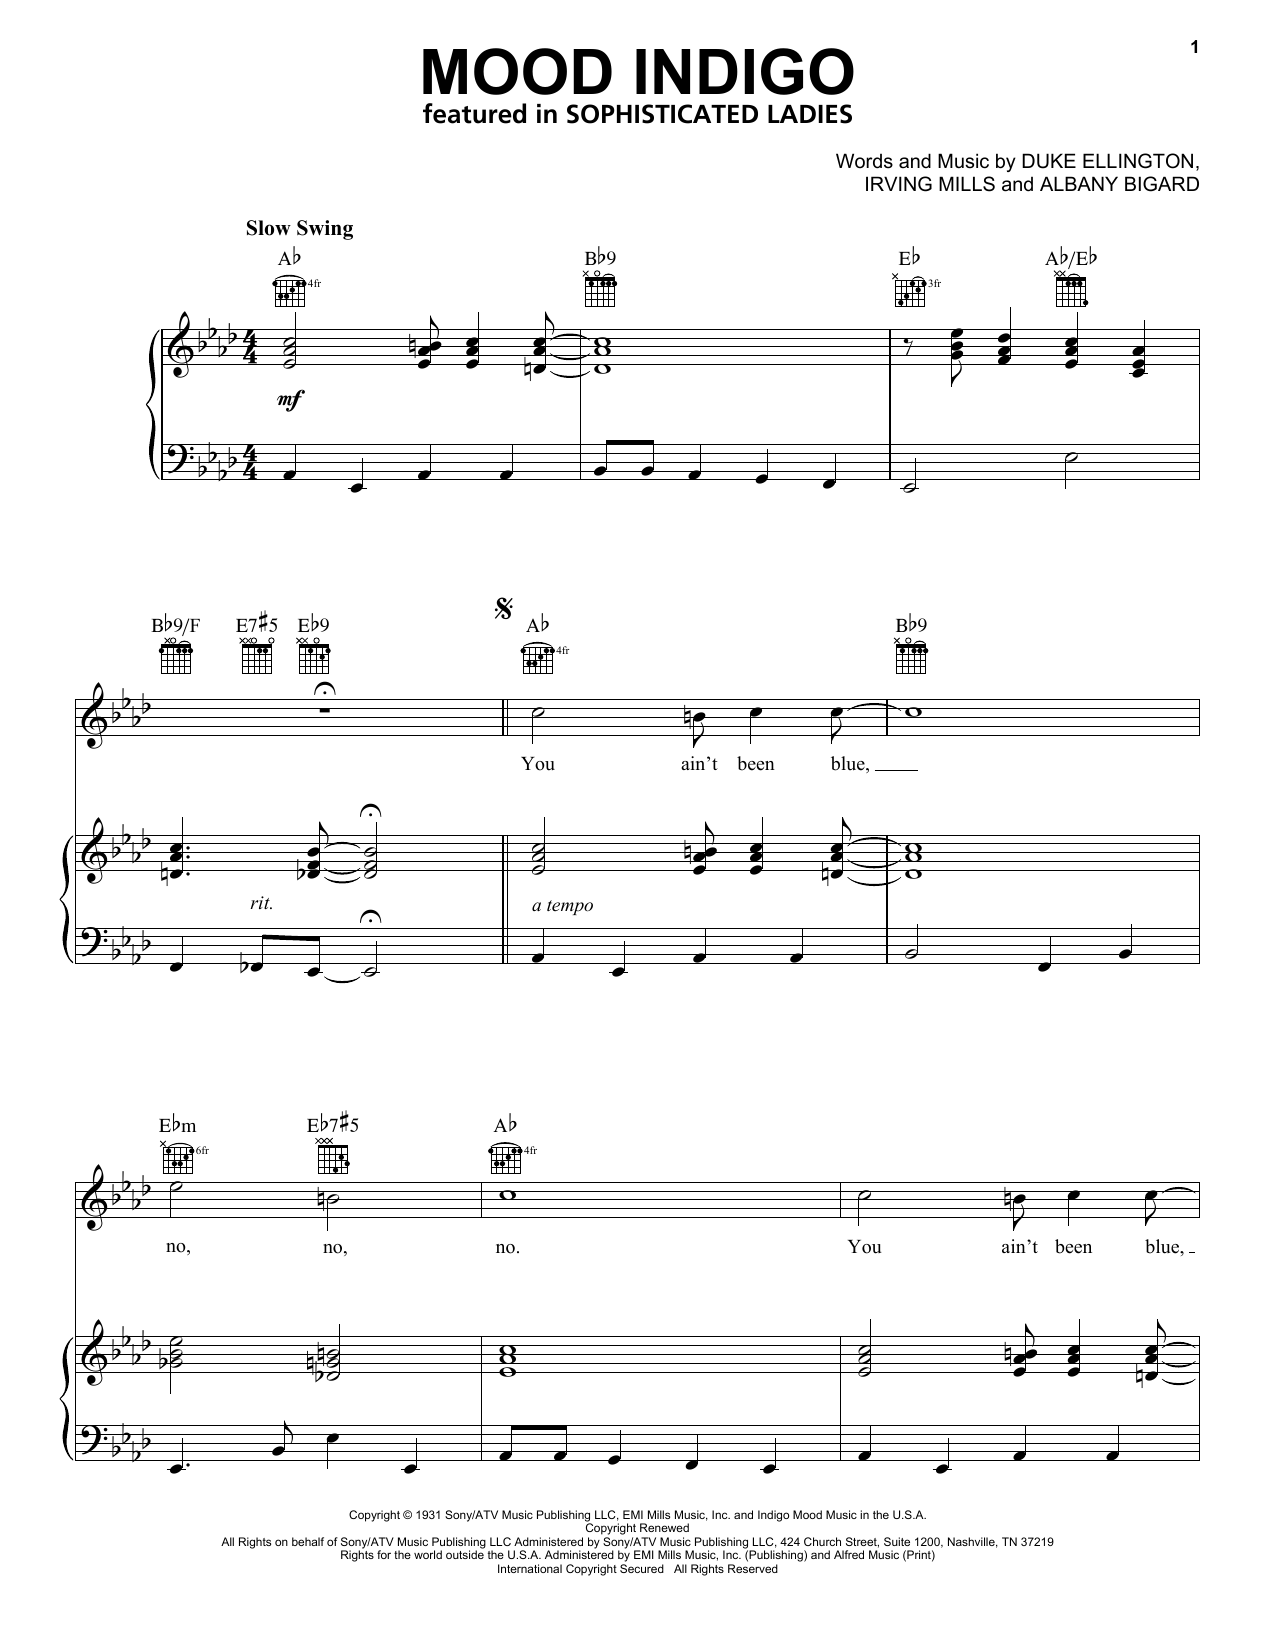 Duke Ellington Mood Indigo Sheet Music Notes & Chords for Guitar Tab - Download or Print PDF